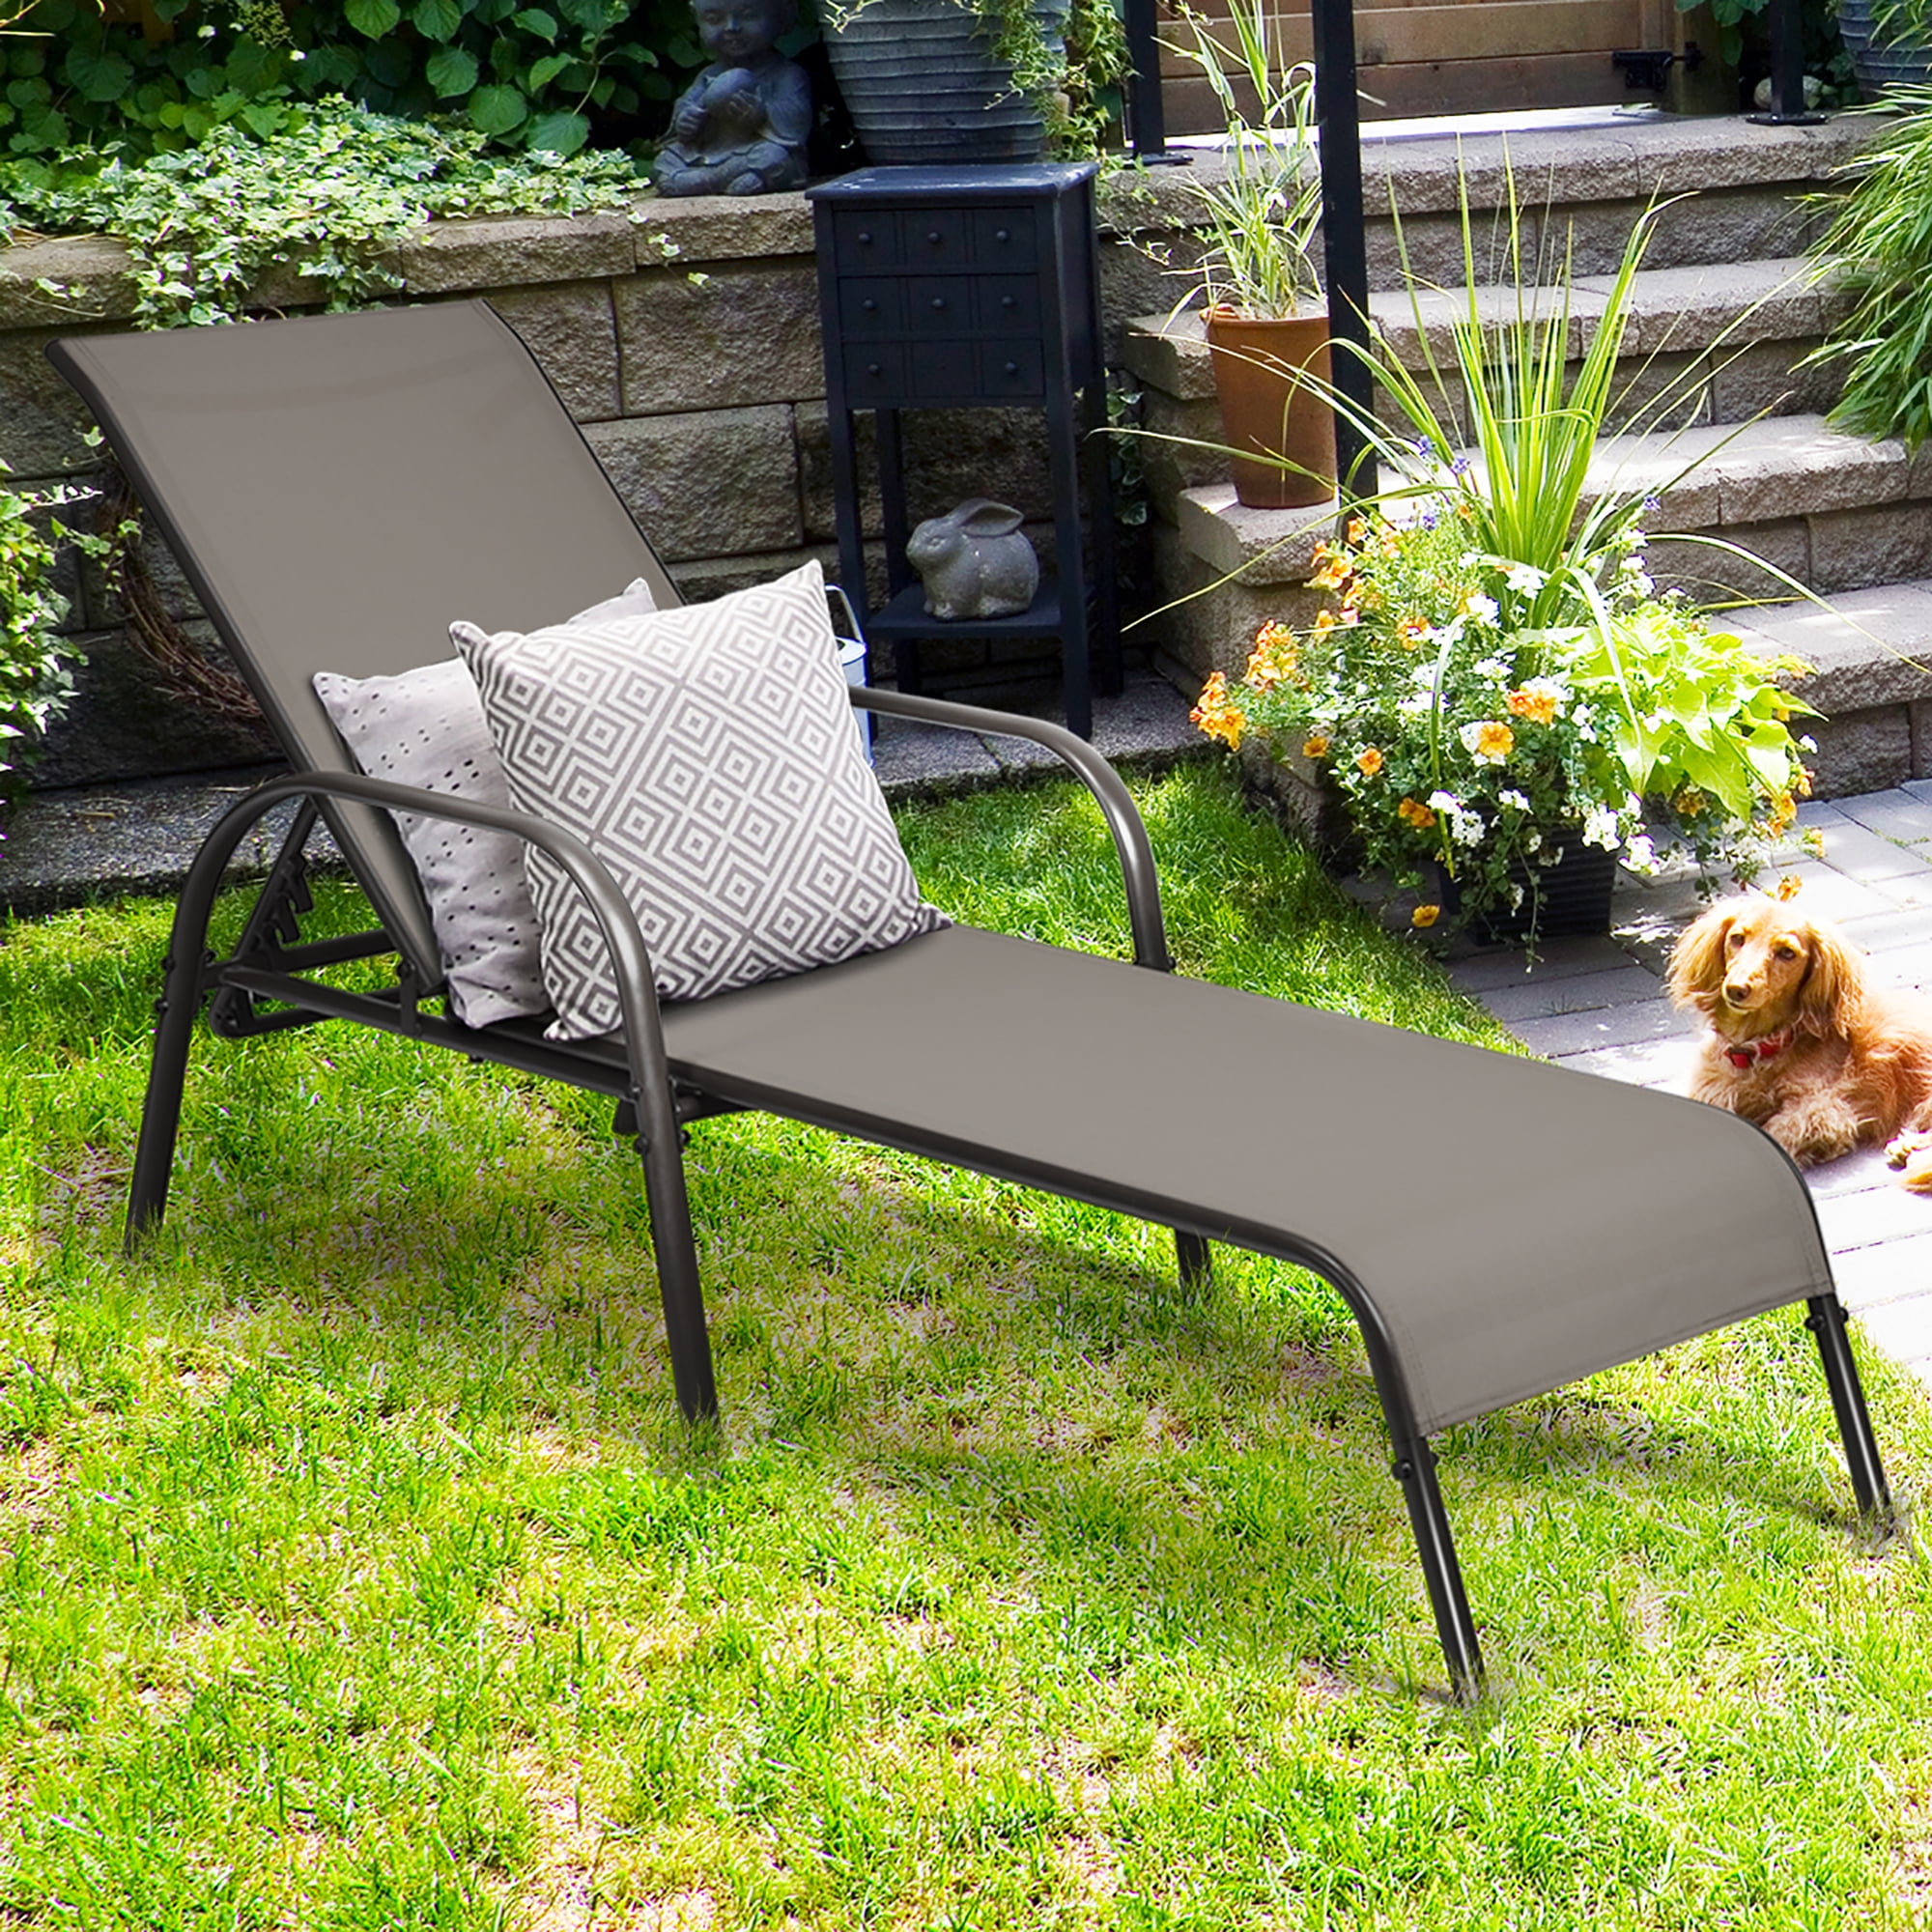 Outdoor Lounge Chairs Target - cepwebdesign